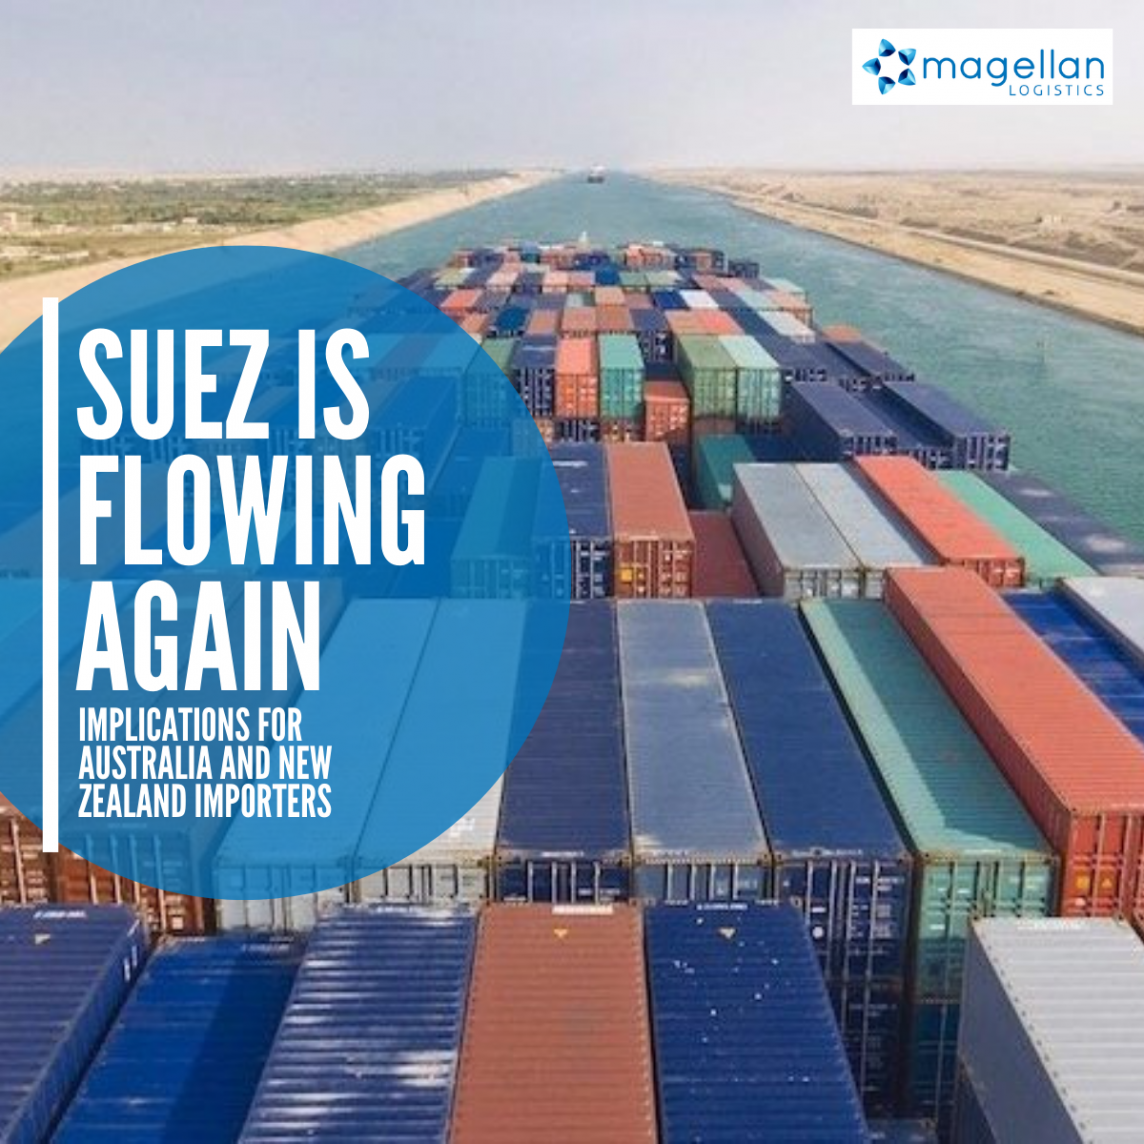 Suez is flowing